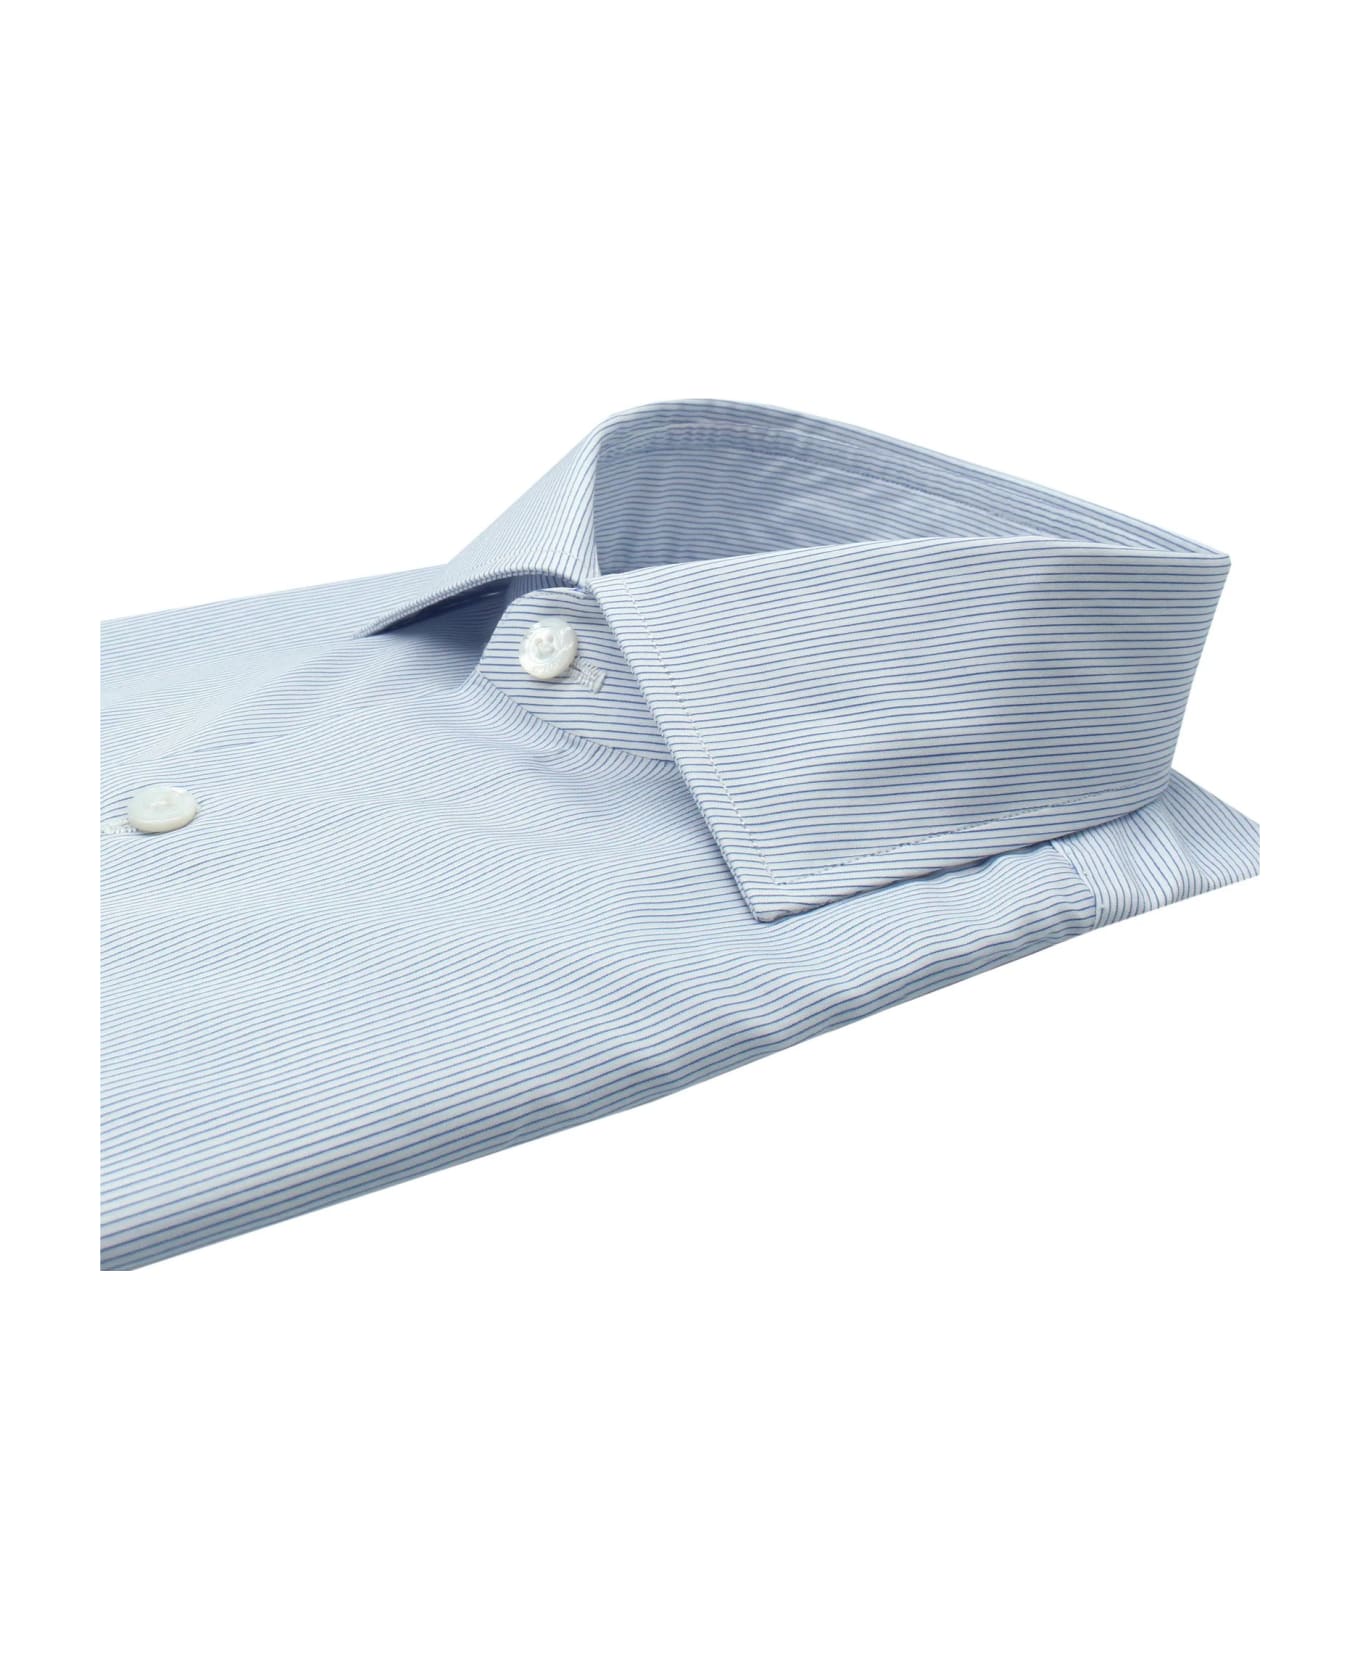 Finamore White And Blue Striped Shirt - Rigato